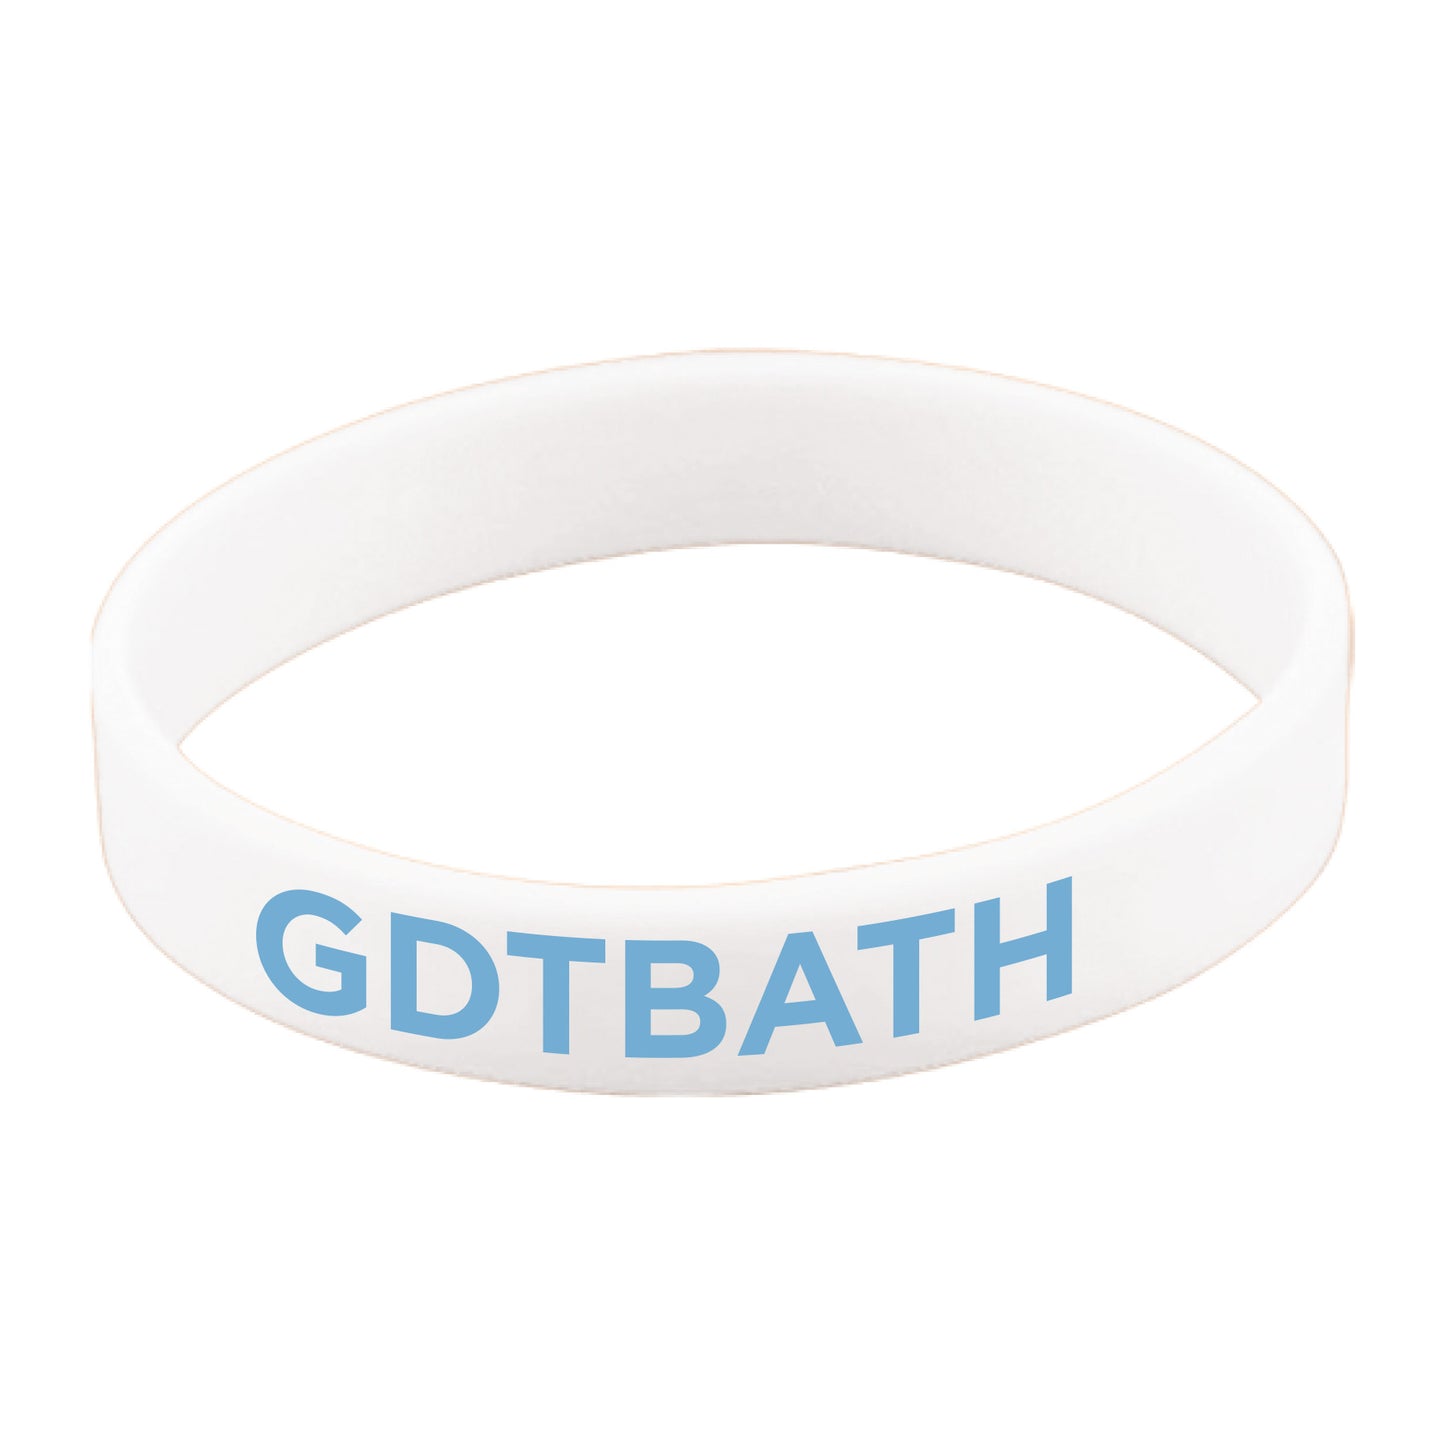 GDTBATH White Rubber Wristband for Carolina Fans